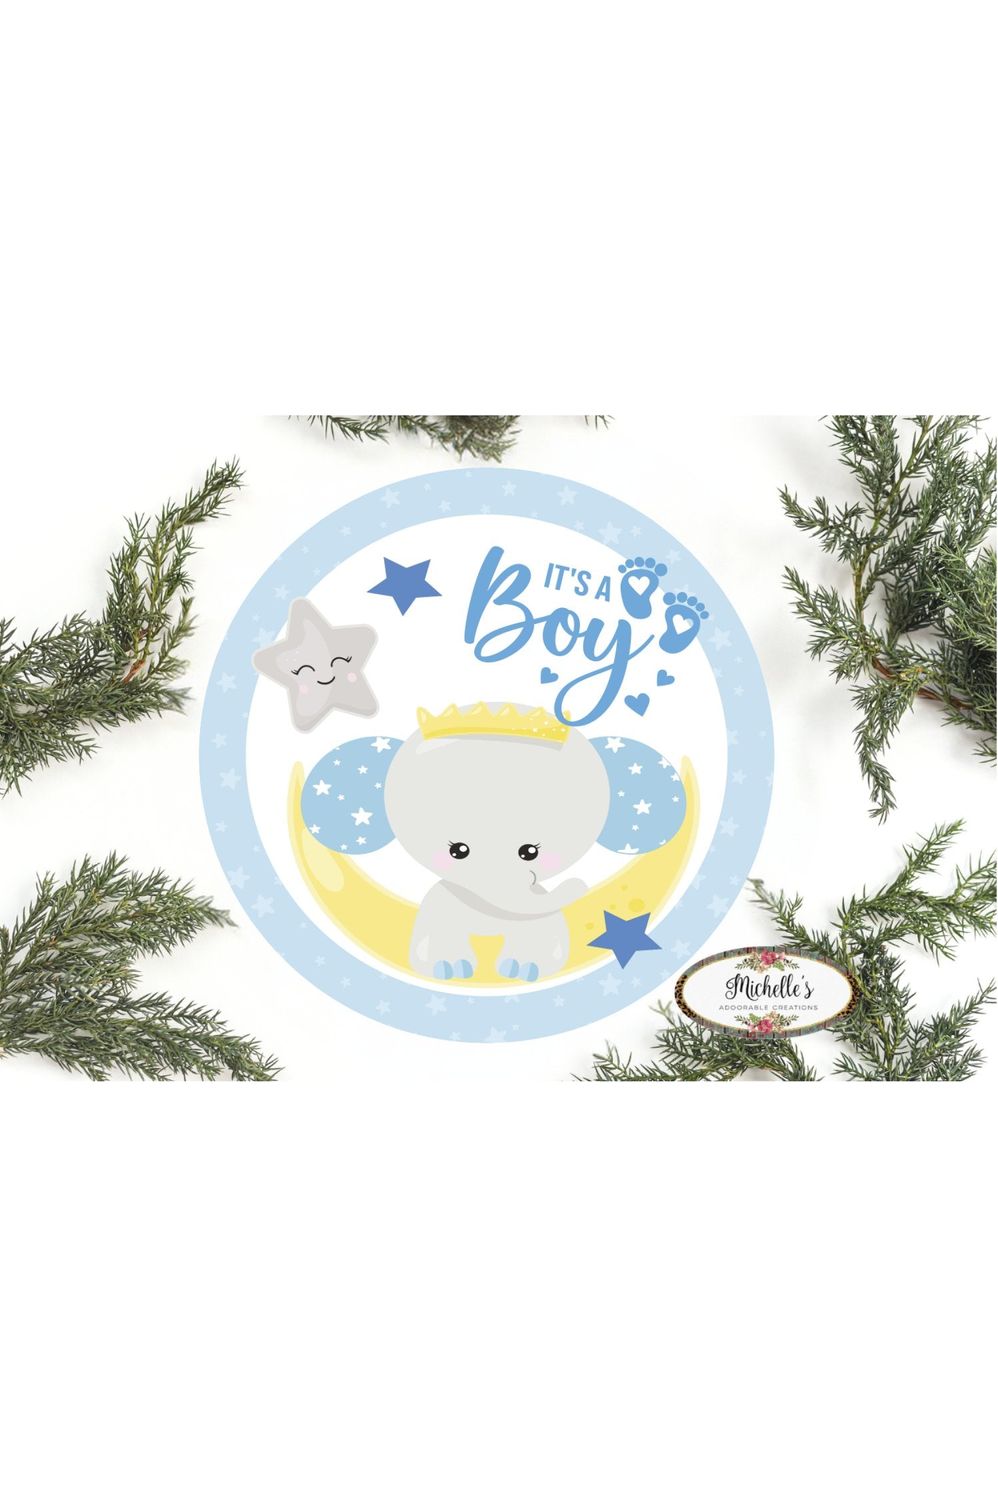 Shop For Its a Boy Baby Elephant Sign - Wreath Enhancement